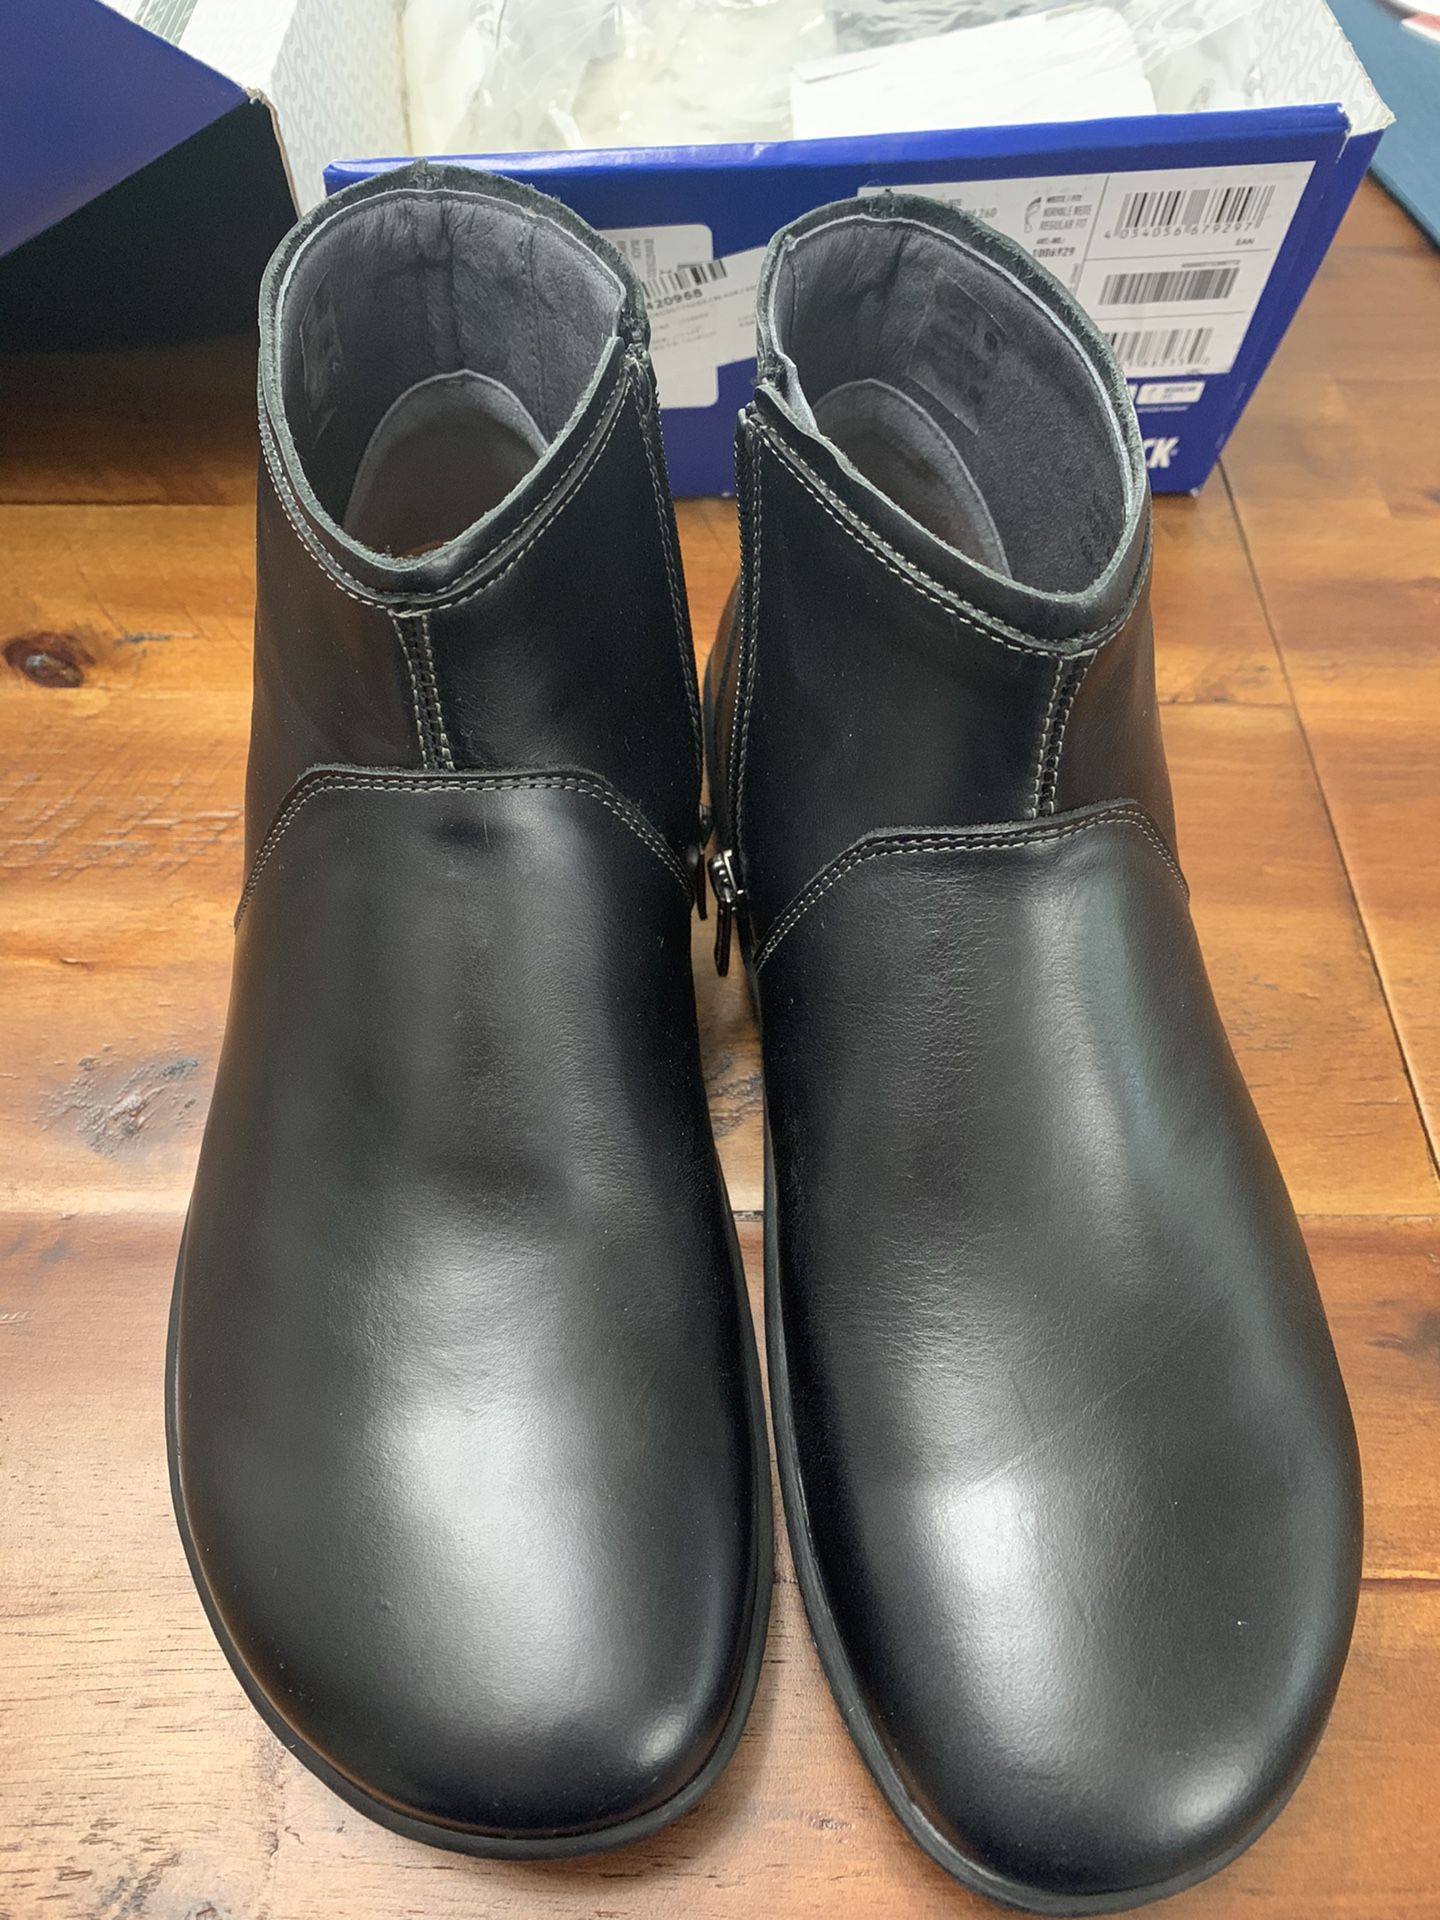 Birkenstock Black Boots size 40 (9.5)